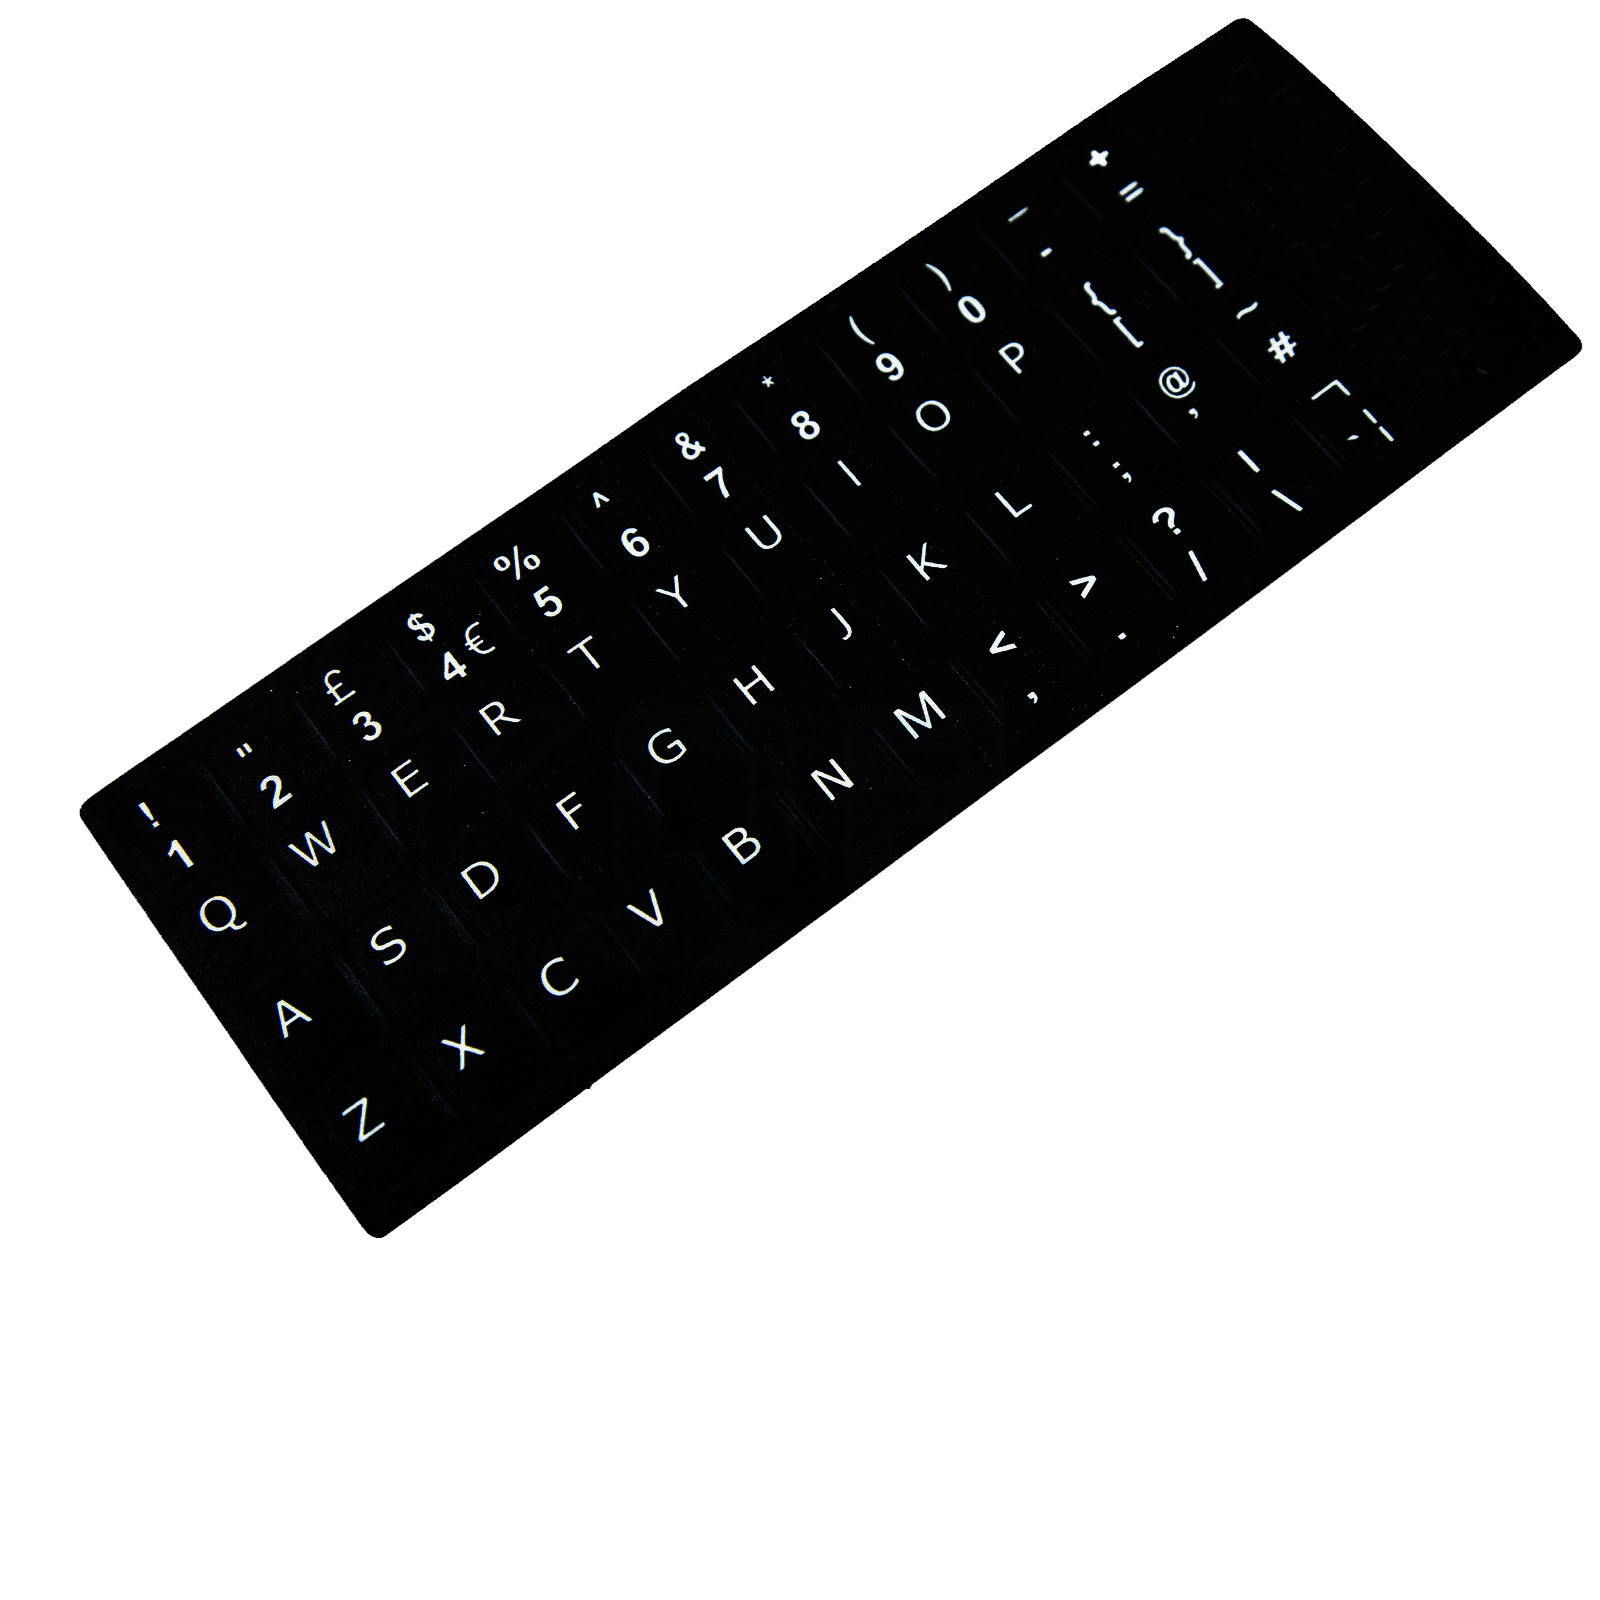 Belkin Qwerty Keyboard Stickers overlays UK Dell Inspiron Latitude Self-adhesive 